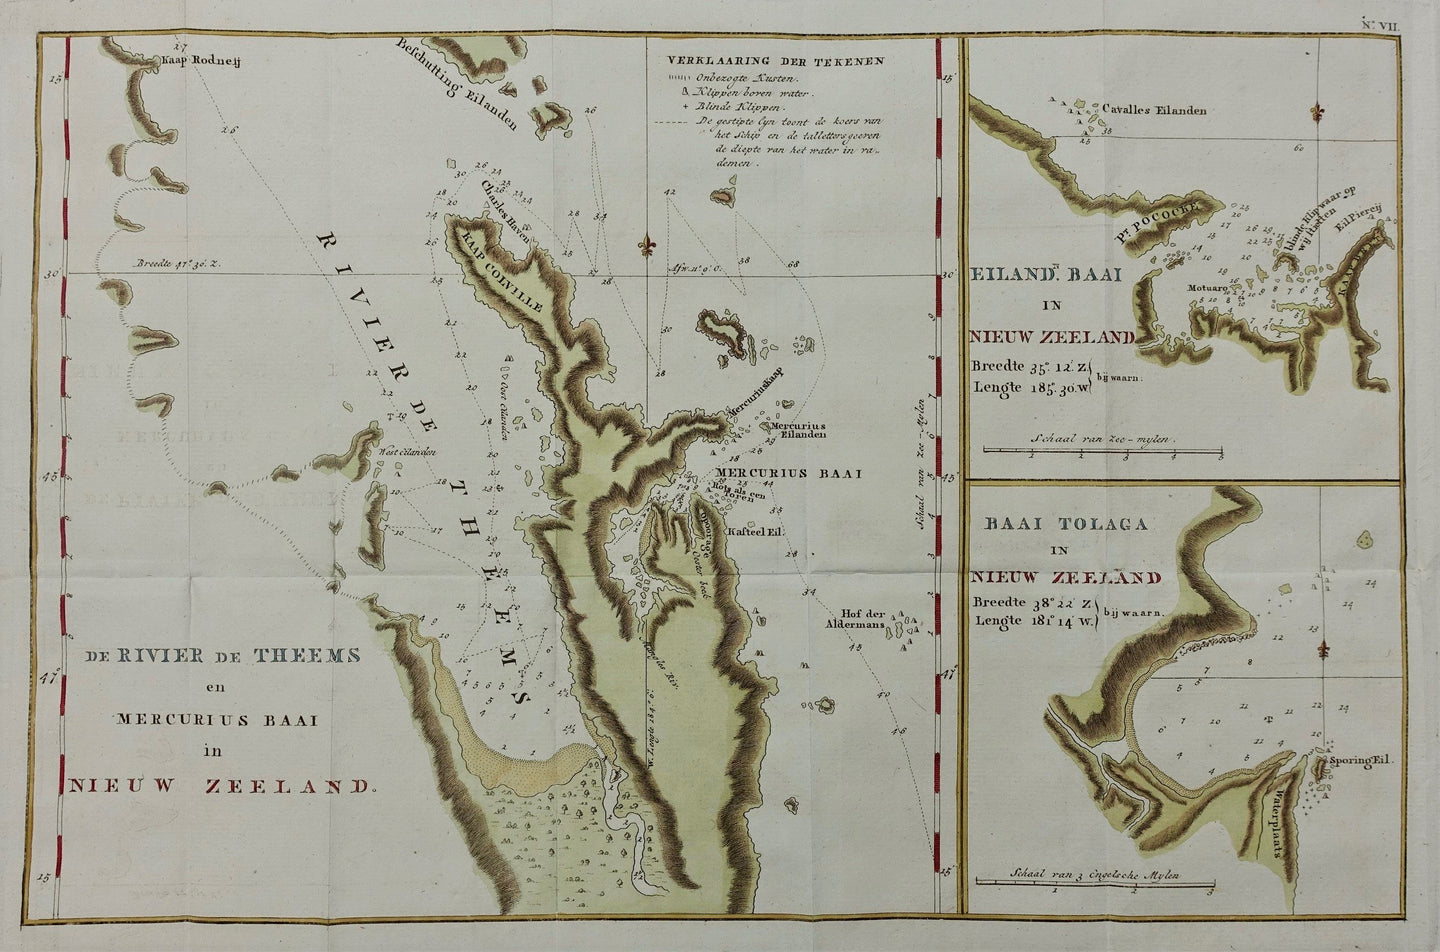 Nieuw-Zeeland Mercury Bay Island Bay Tolaga Bay New Zealand - C van Baarsel / J Cook - ca. 1797